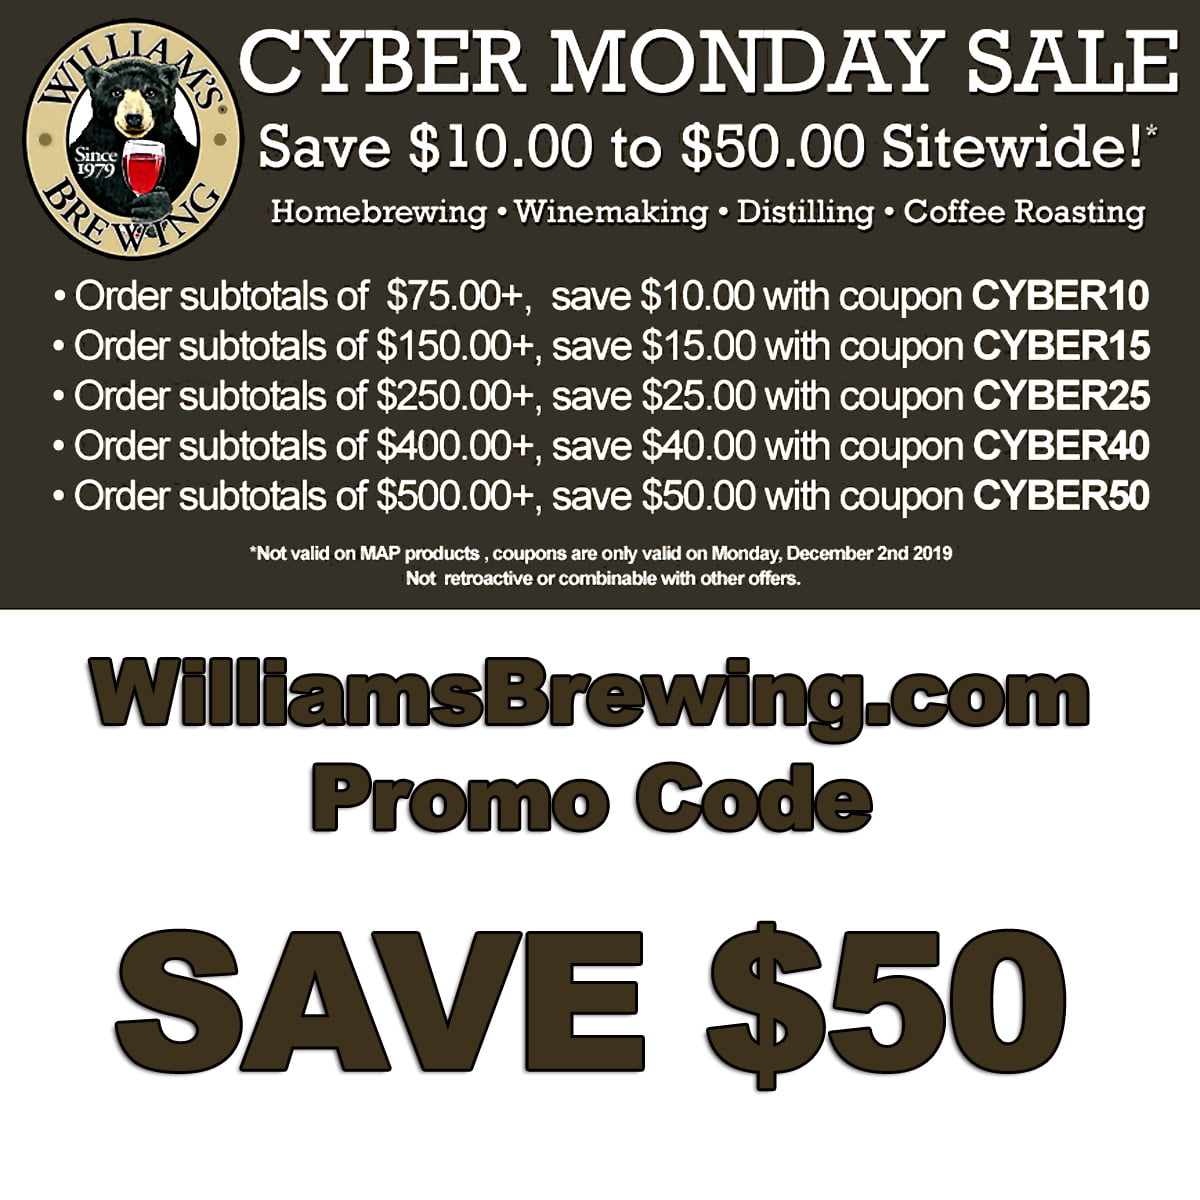 WilliamsBrewing.com Promo Code Cyber Monday 2019